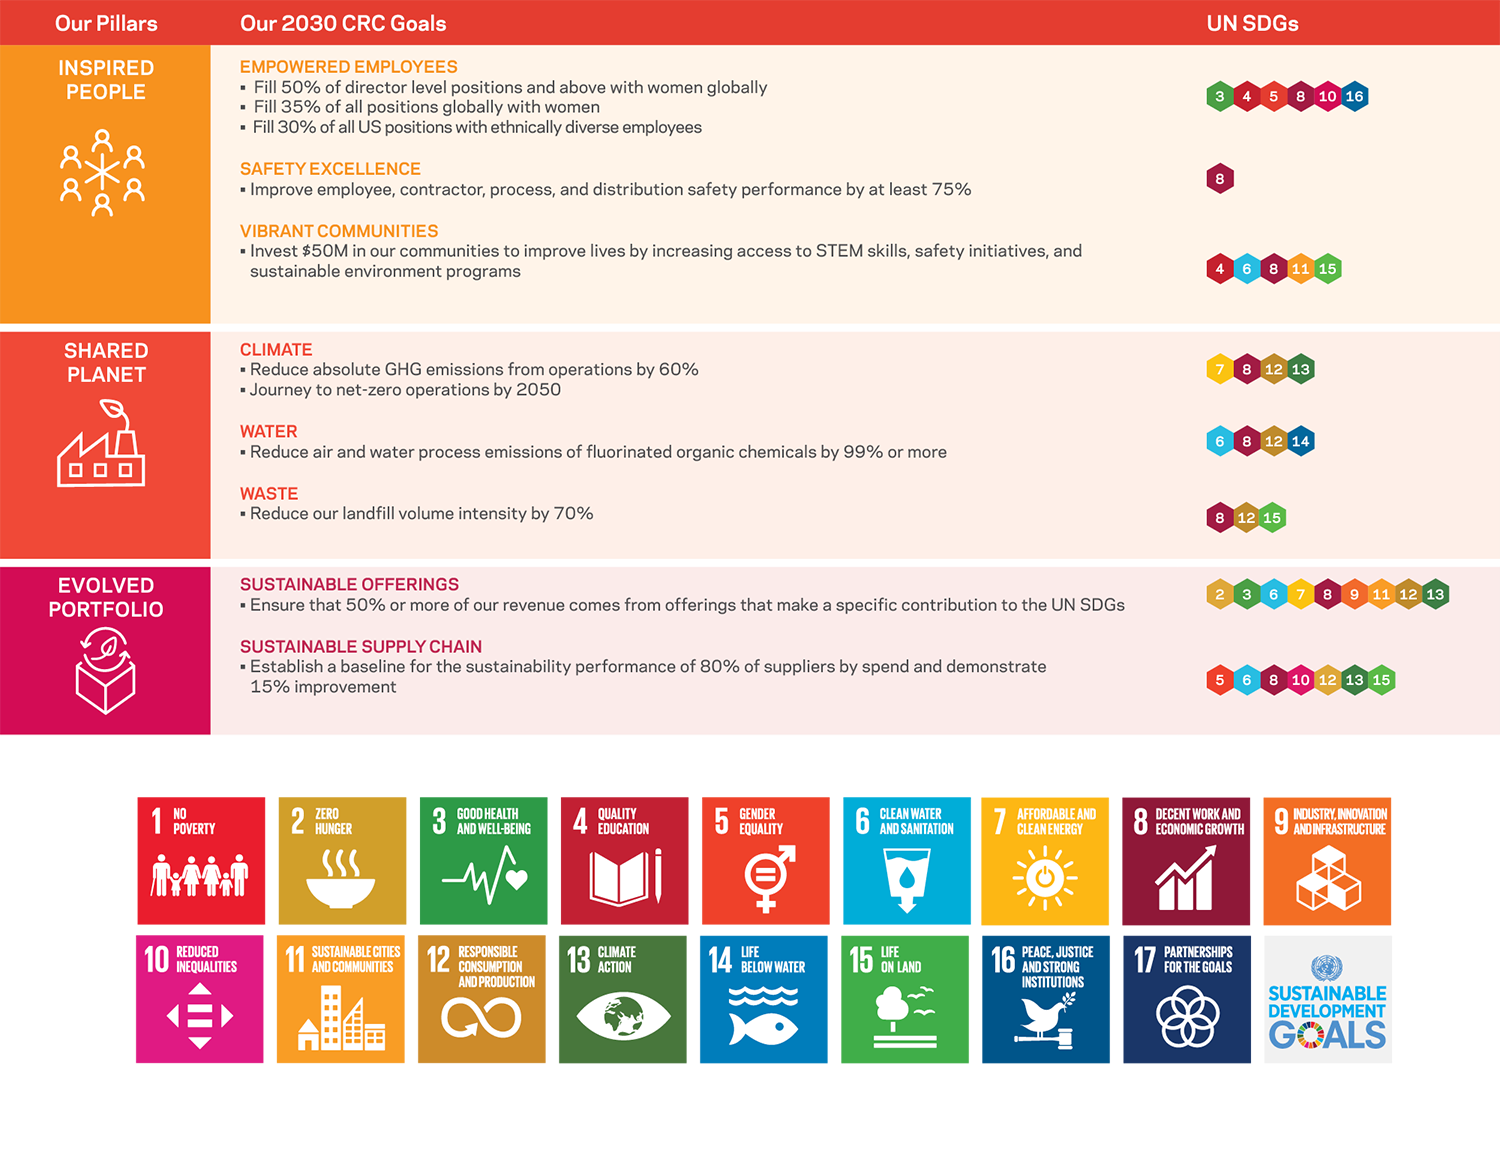 Our 2030 CRC Goals